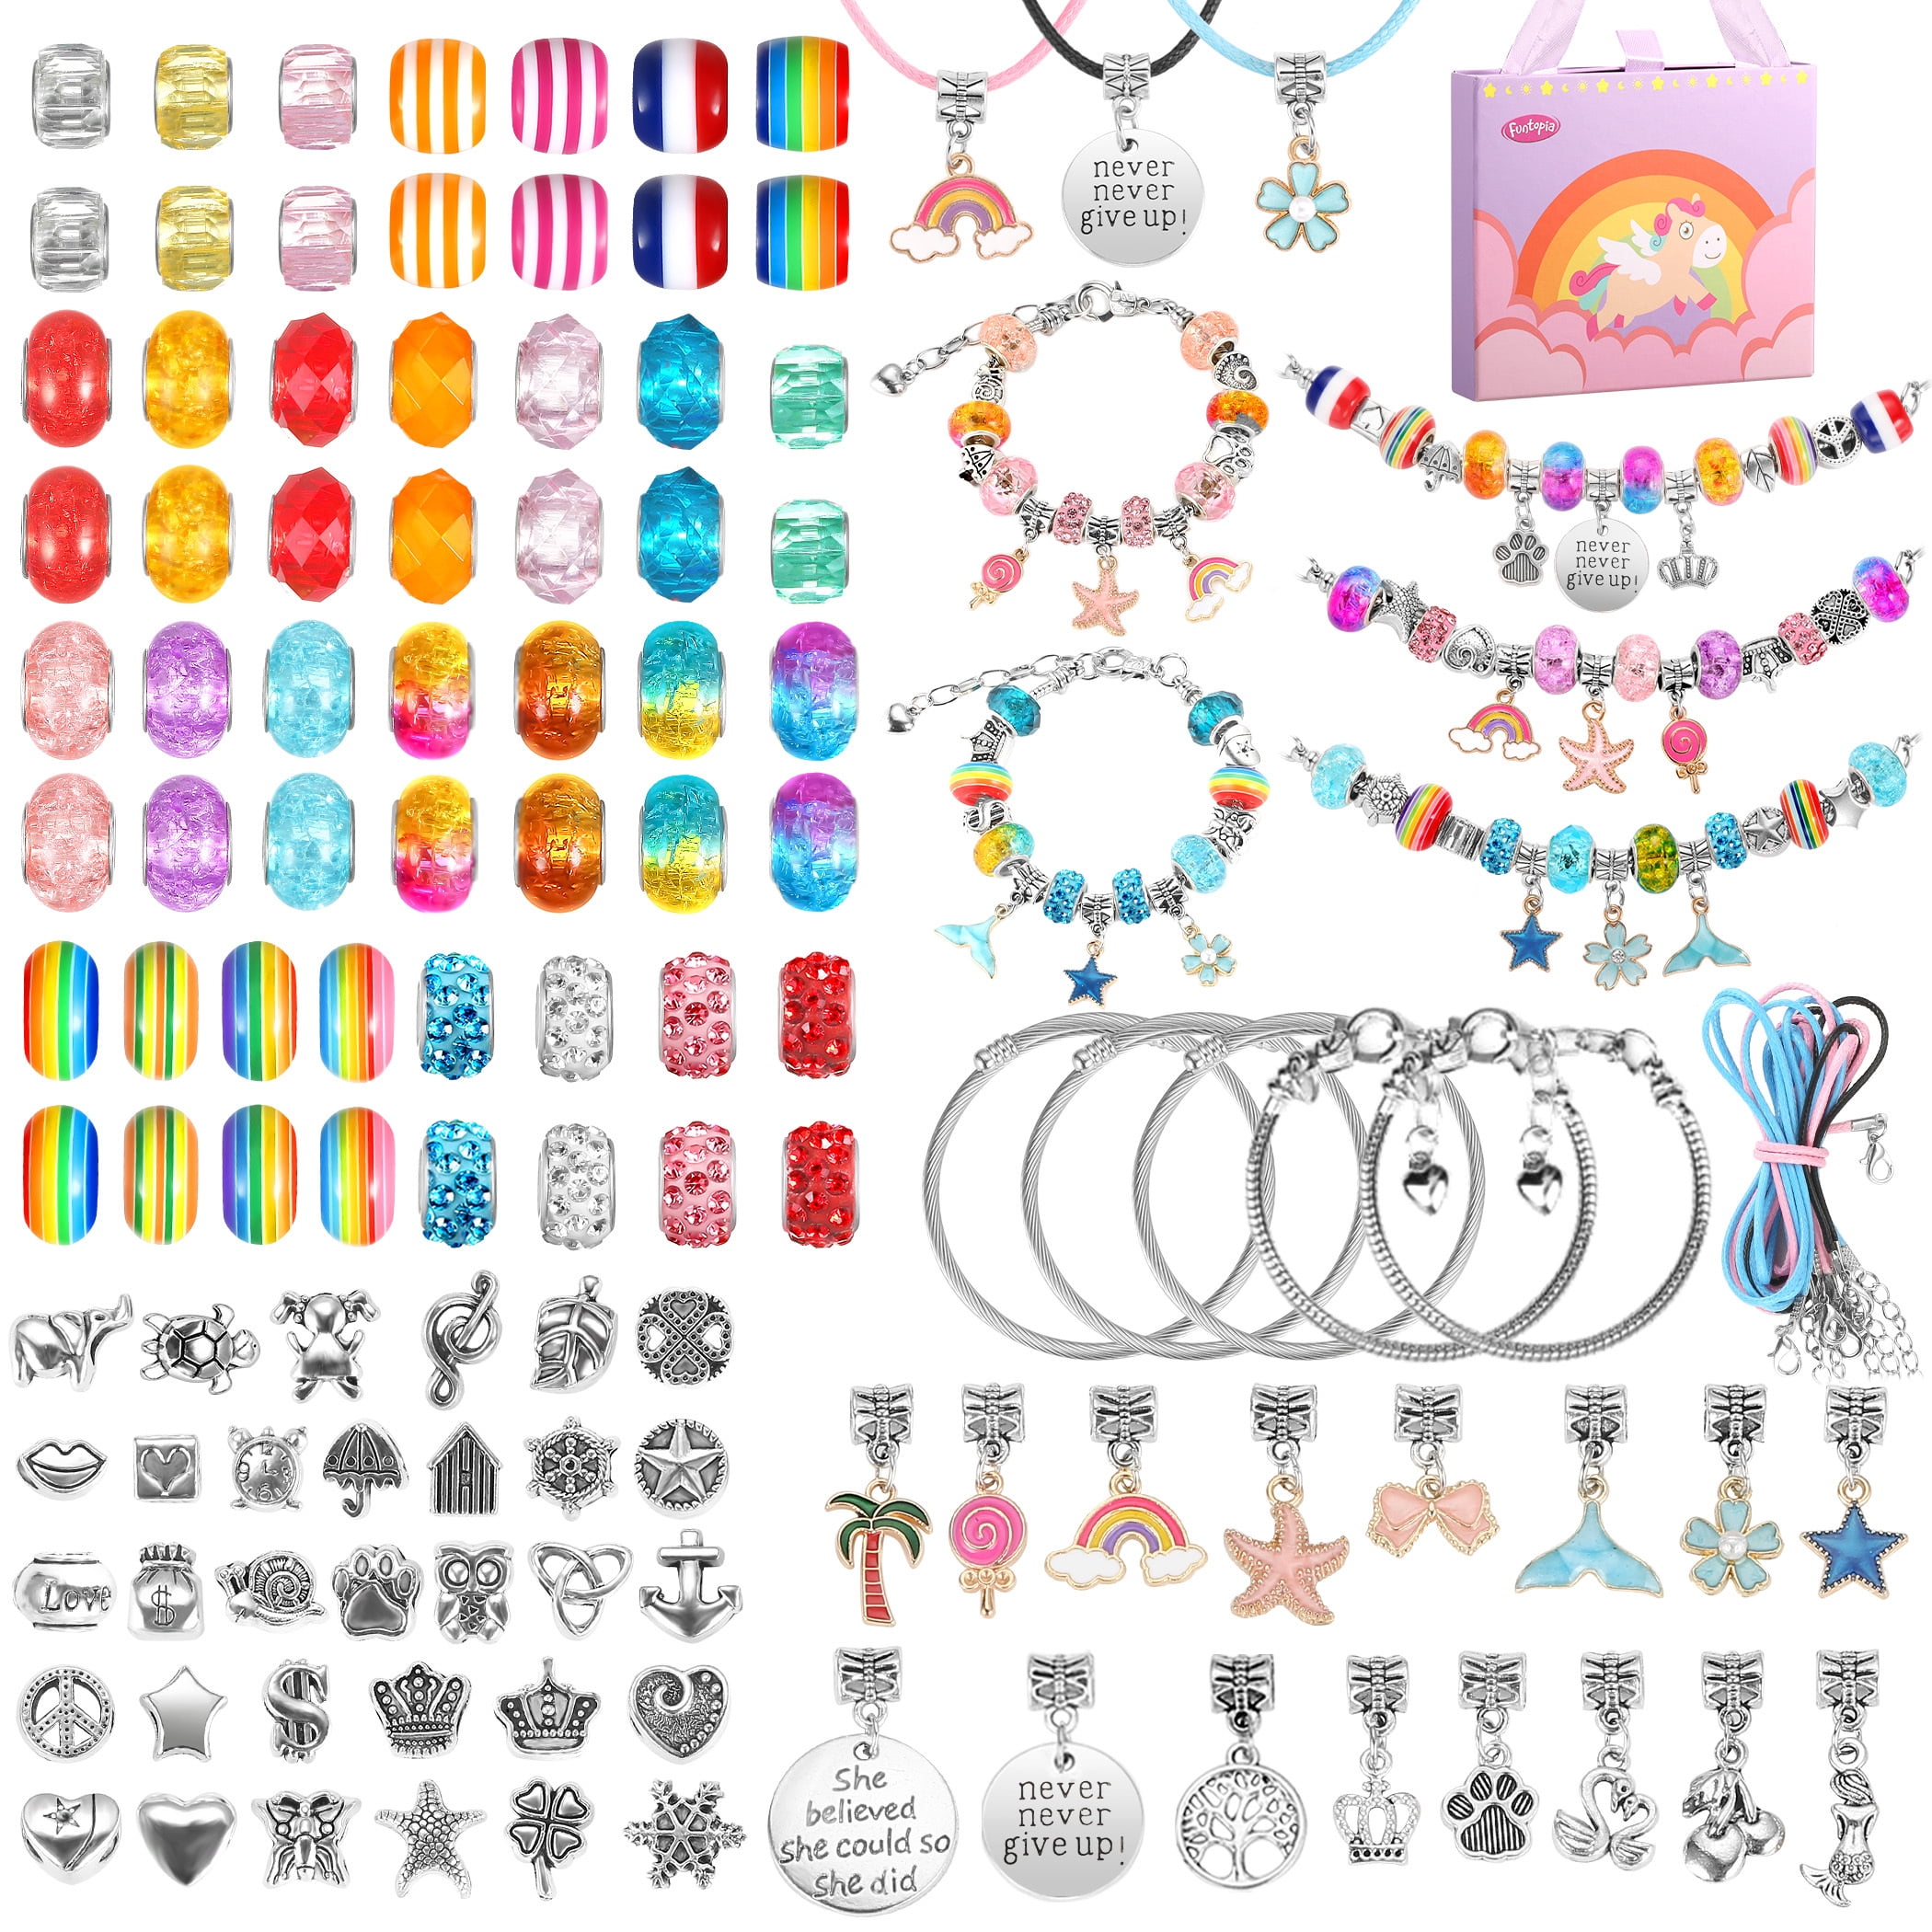 Friendship Bracelet Making Kit for Teen Girls, DIY Bracelet Maker Kit for  Kids Age 8-12, Colorful Jewelry Arts Craft Birthday Christmas Gifts Toys  for